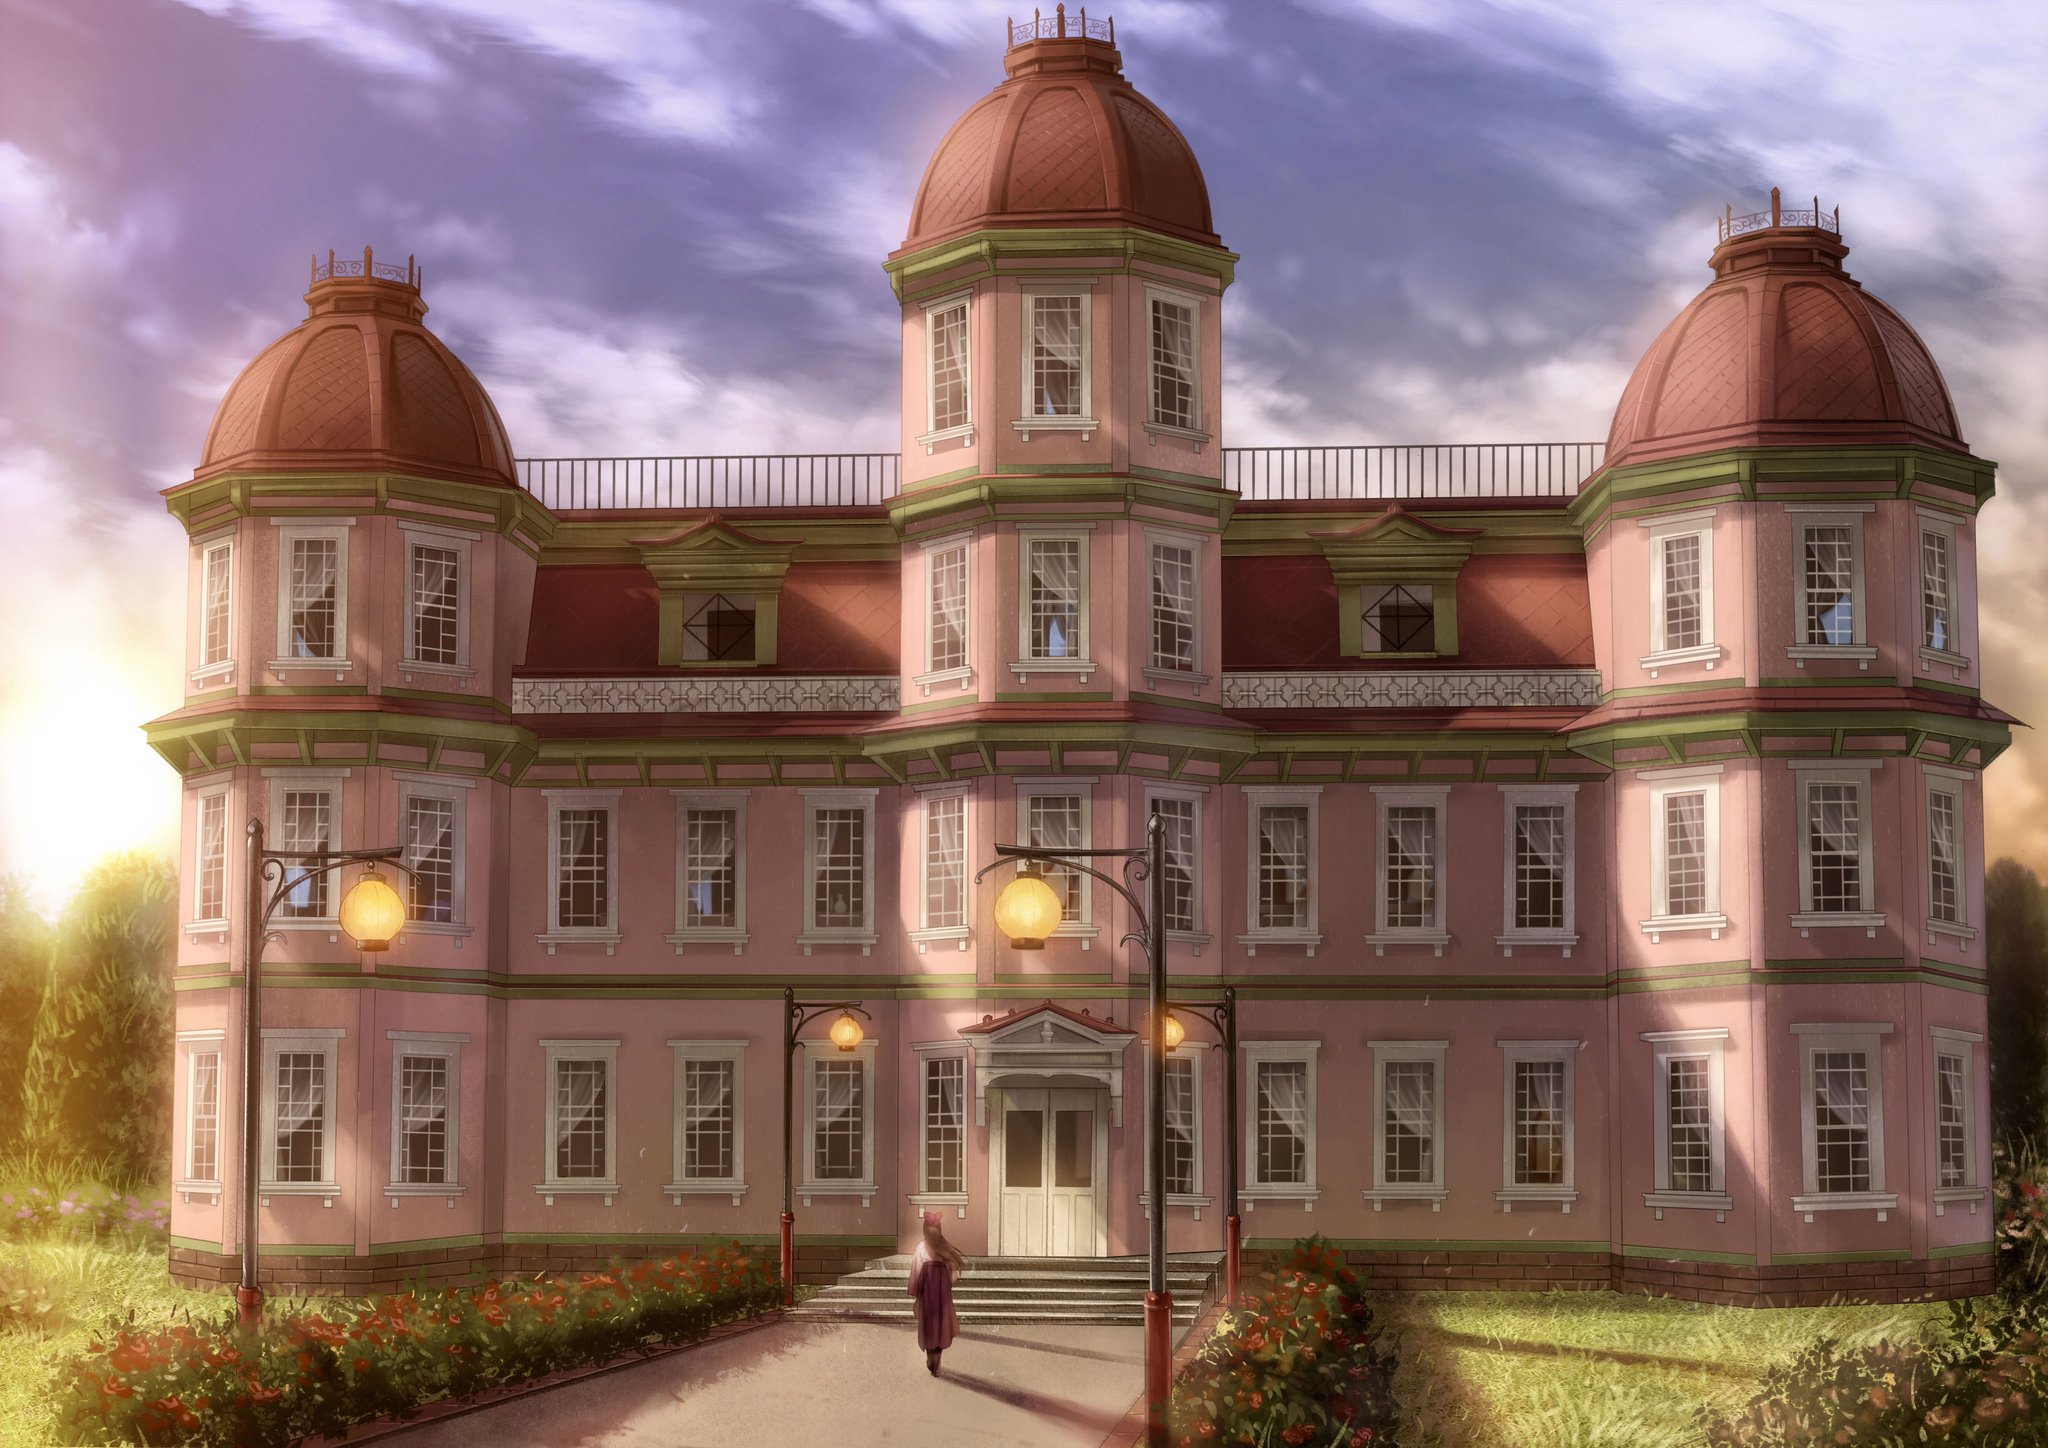 Inside the madagora mansion | Wiki | ☆ Anime Roleplay ☆ Amino